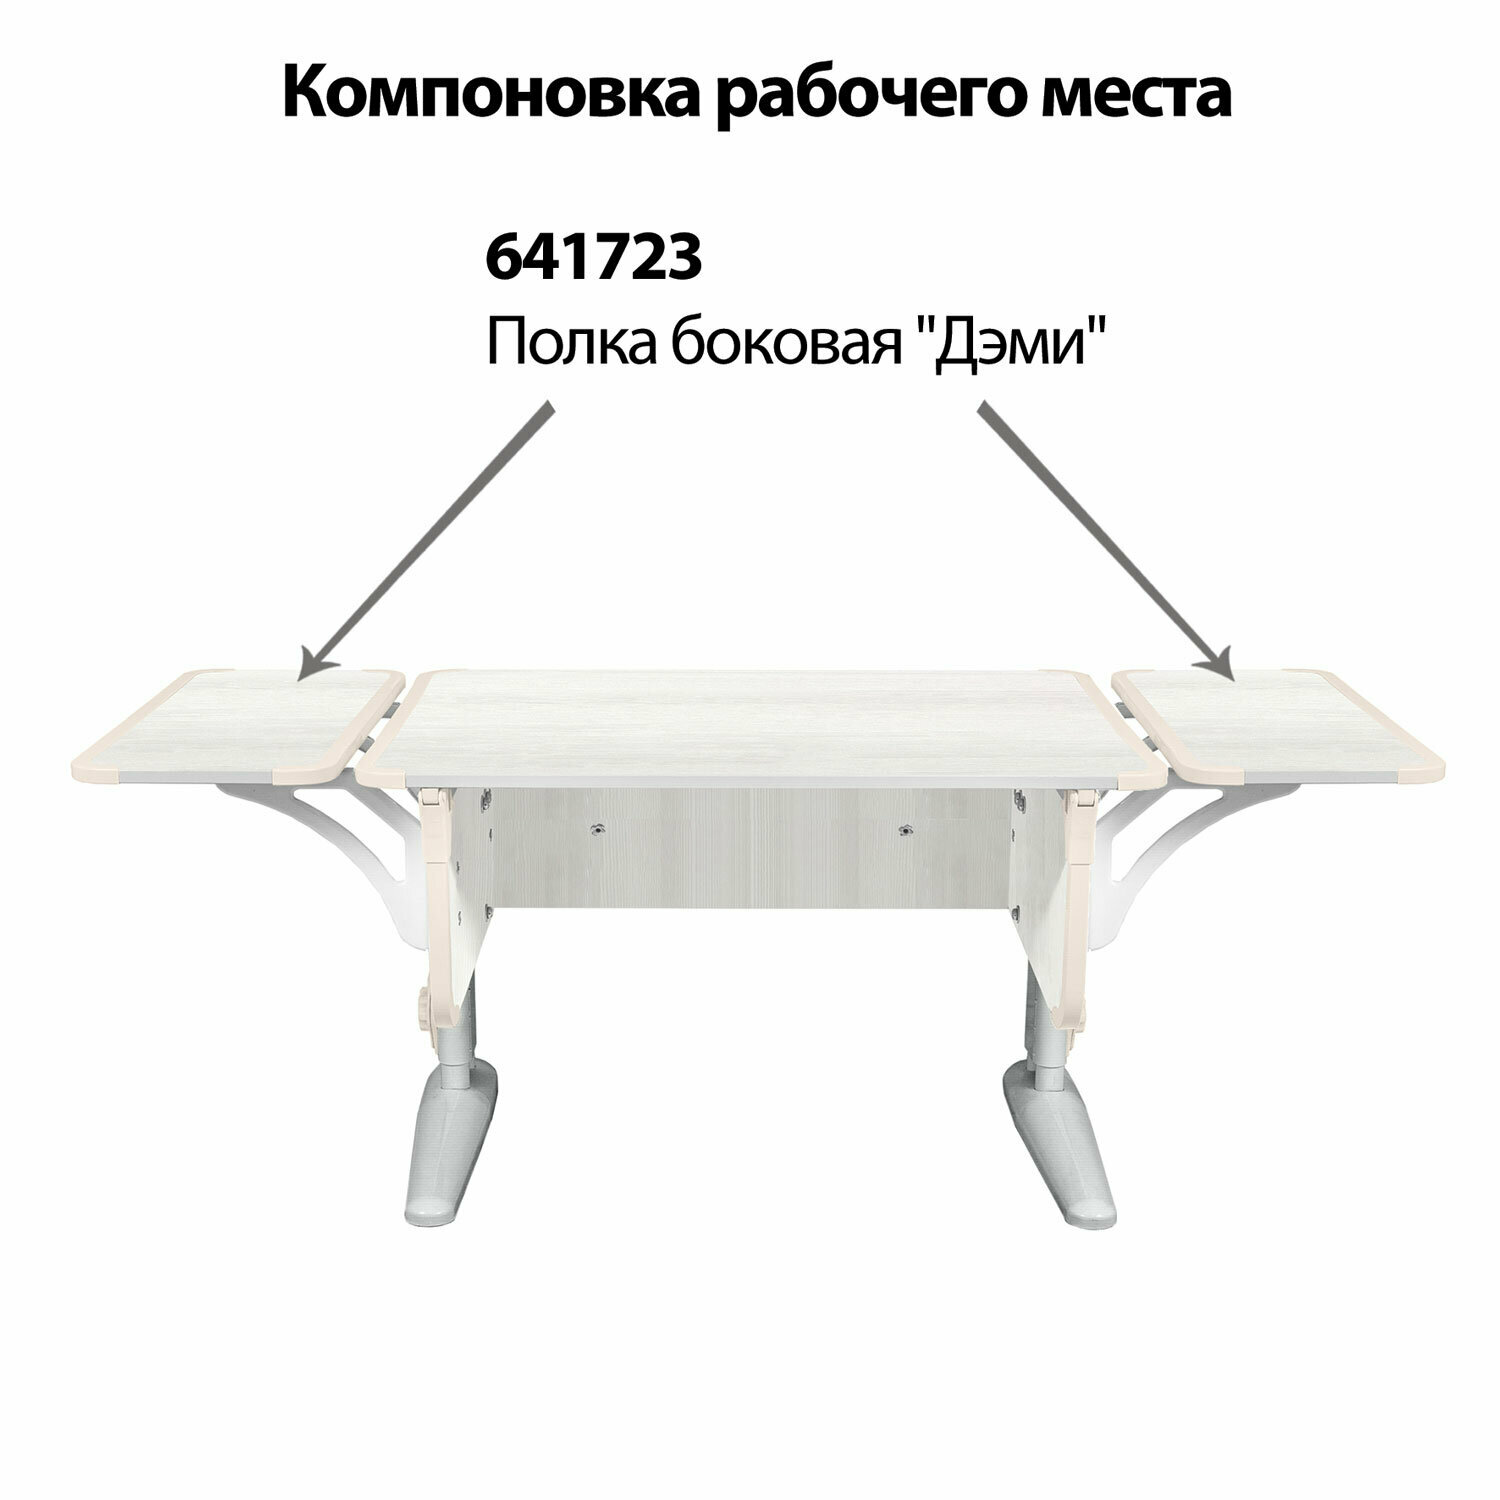 Стол-парта регулируемый "дэми" СУТ.43, 1000х550х530-815 мм, серый каркас, пластик бежевый, рамух белый (комплект) - фотография № 6